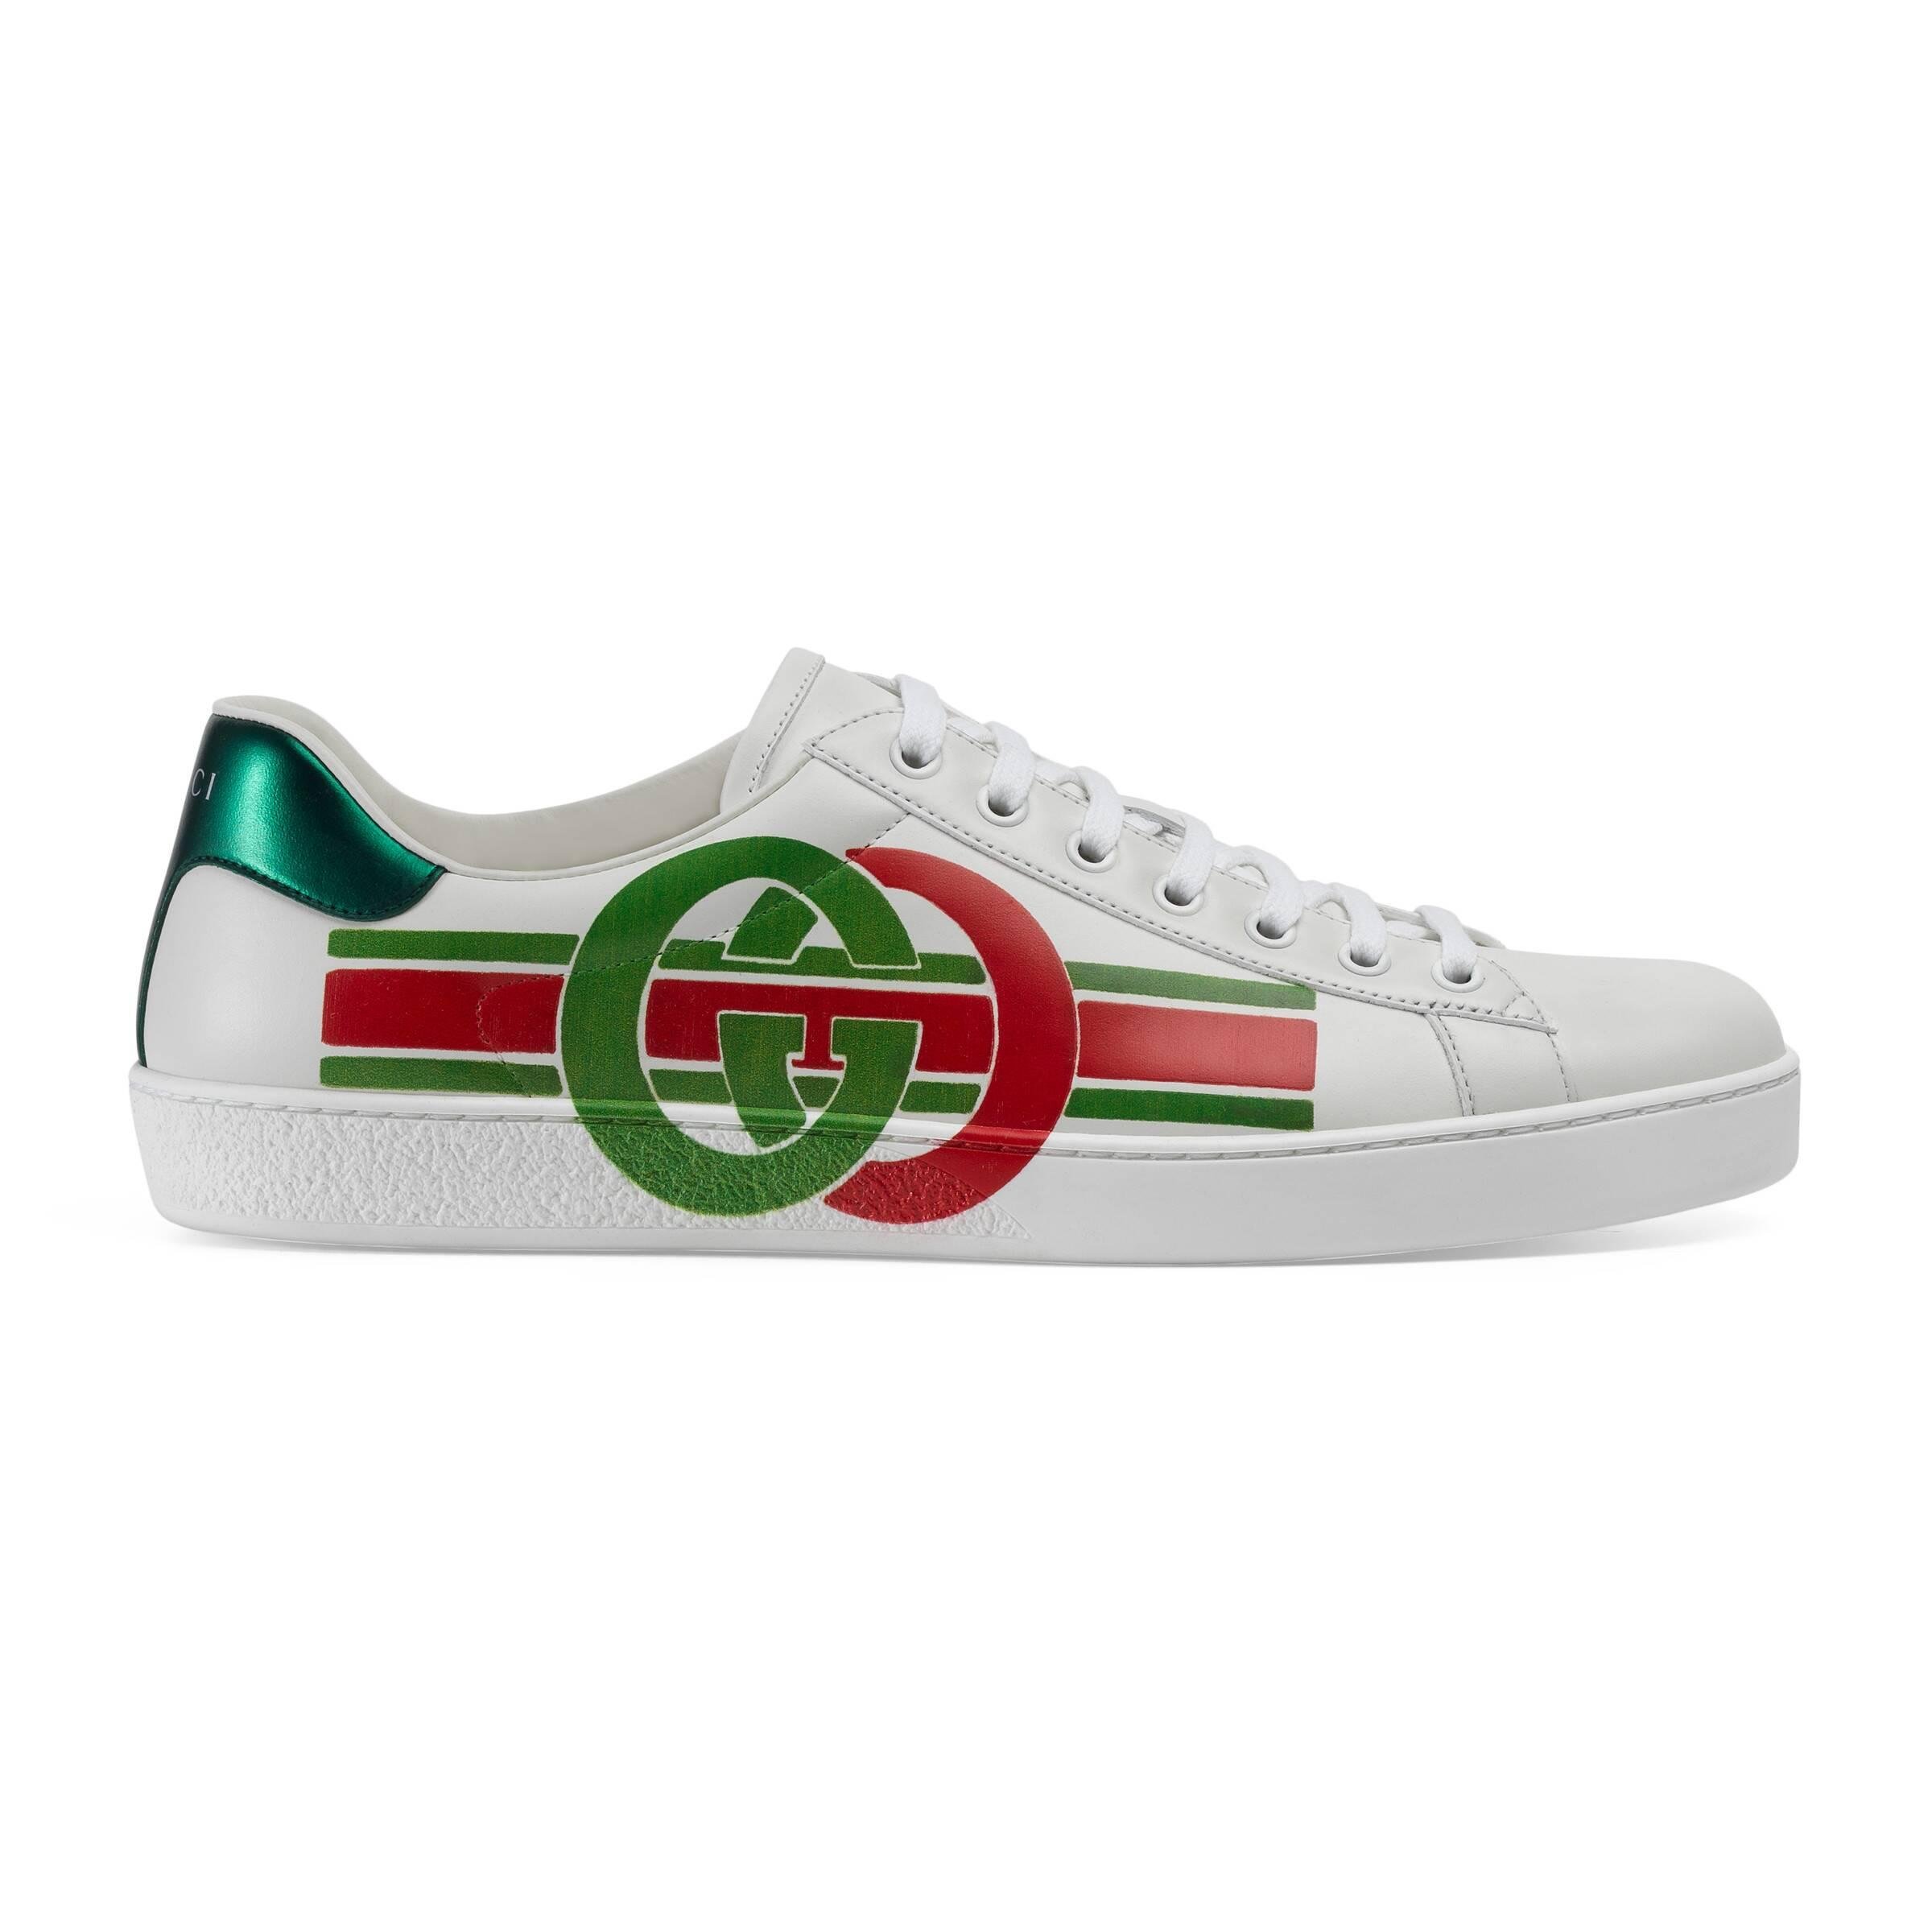 Gucci, Shoes, Mens Gucci Ace Sneaker White W Greenred